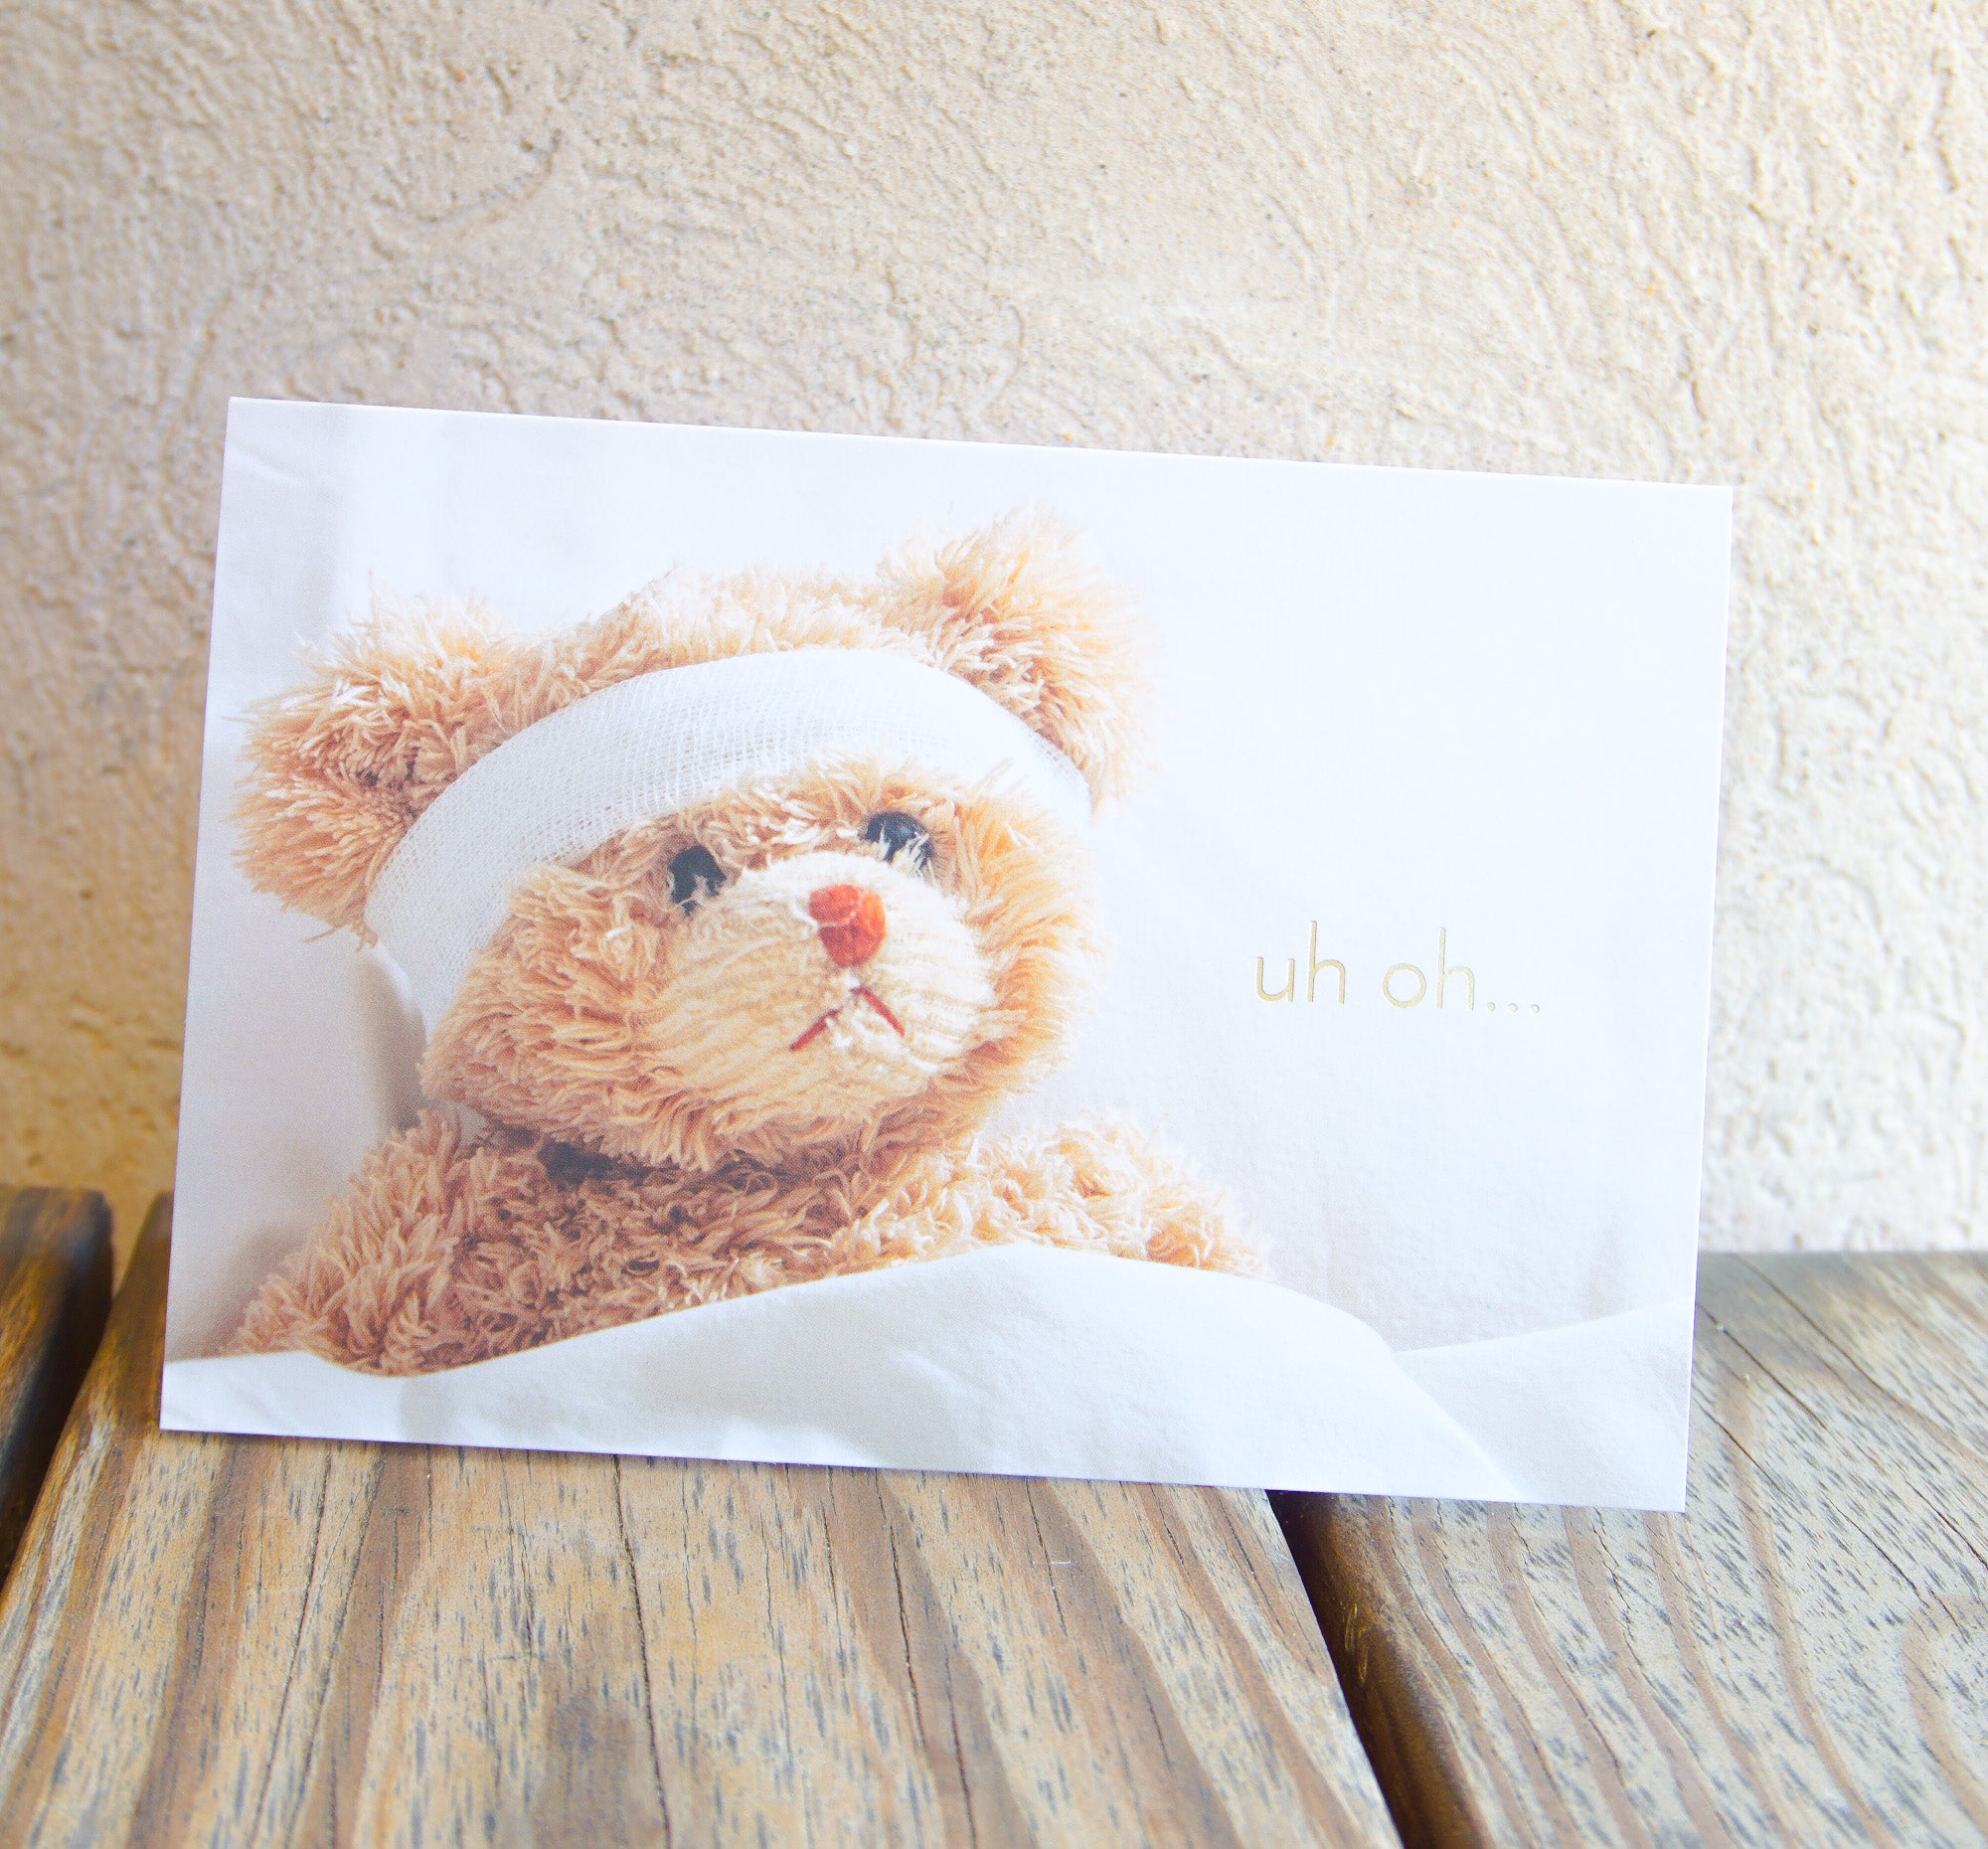 Get Well Soon Card Teddy Bear With Bandaged Arm Stock Illustration